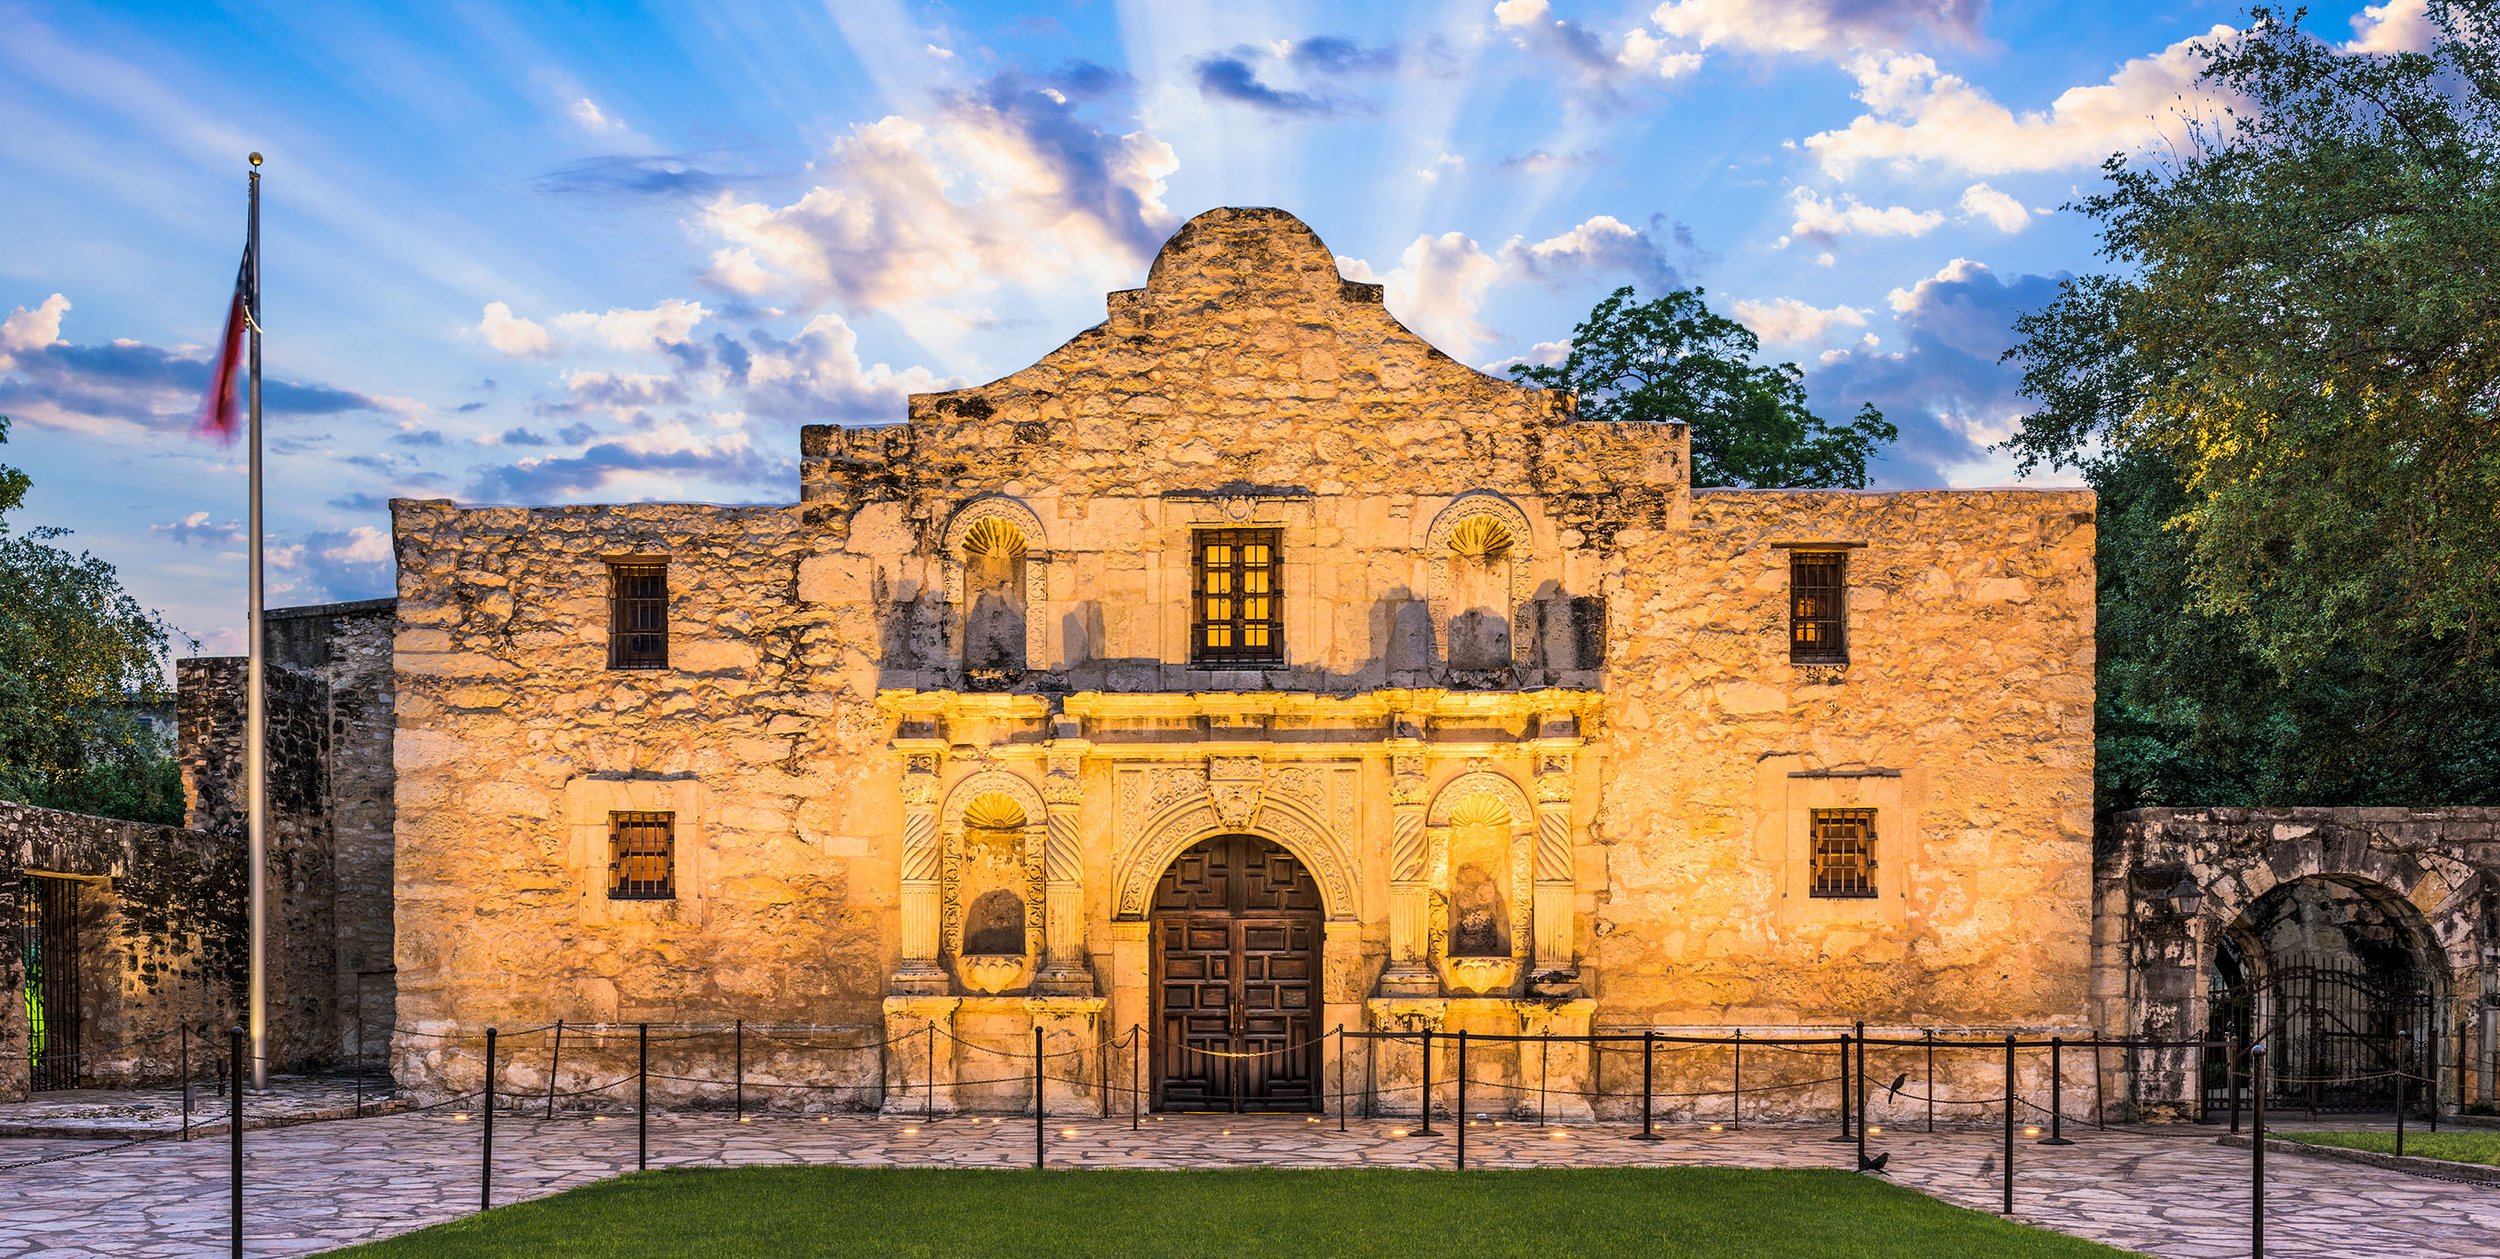 The Alamo at San Antonio, Texas